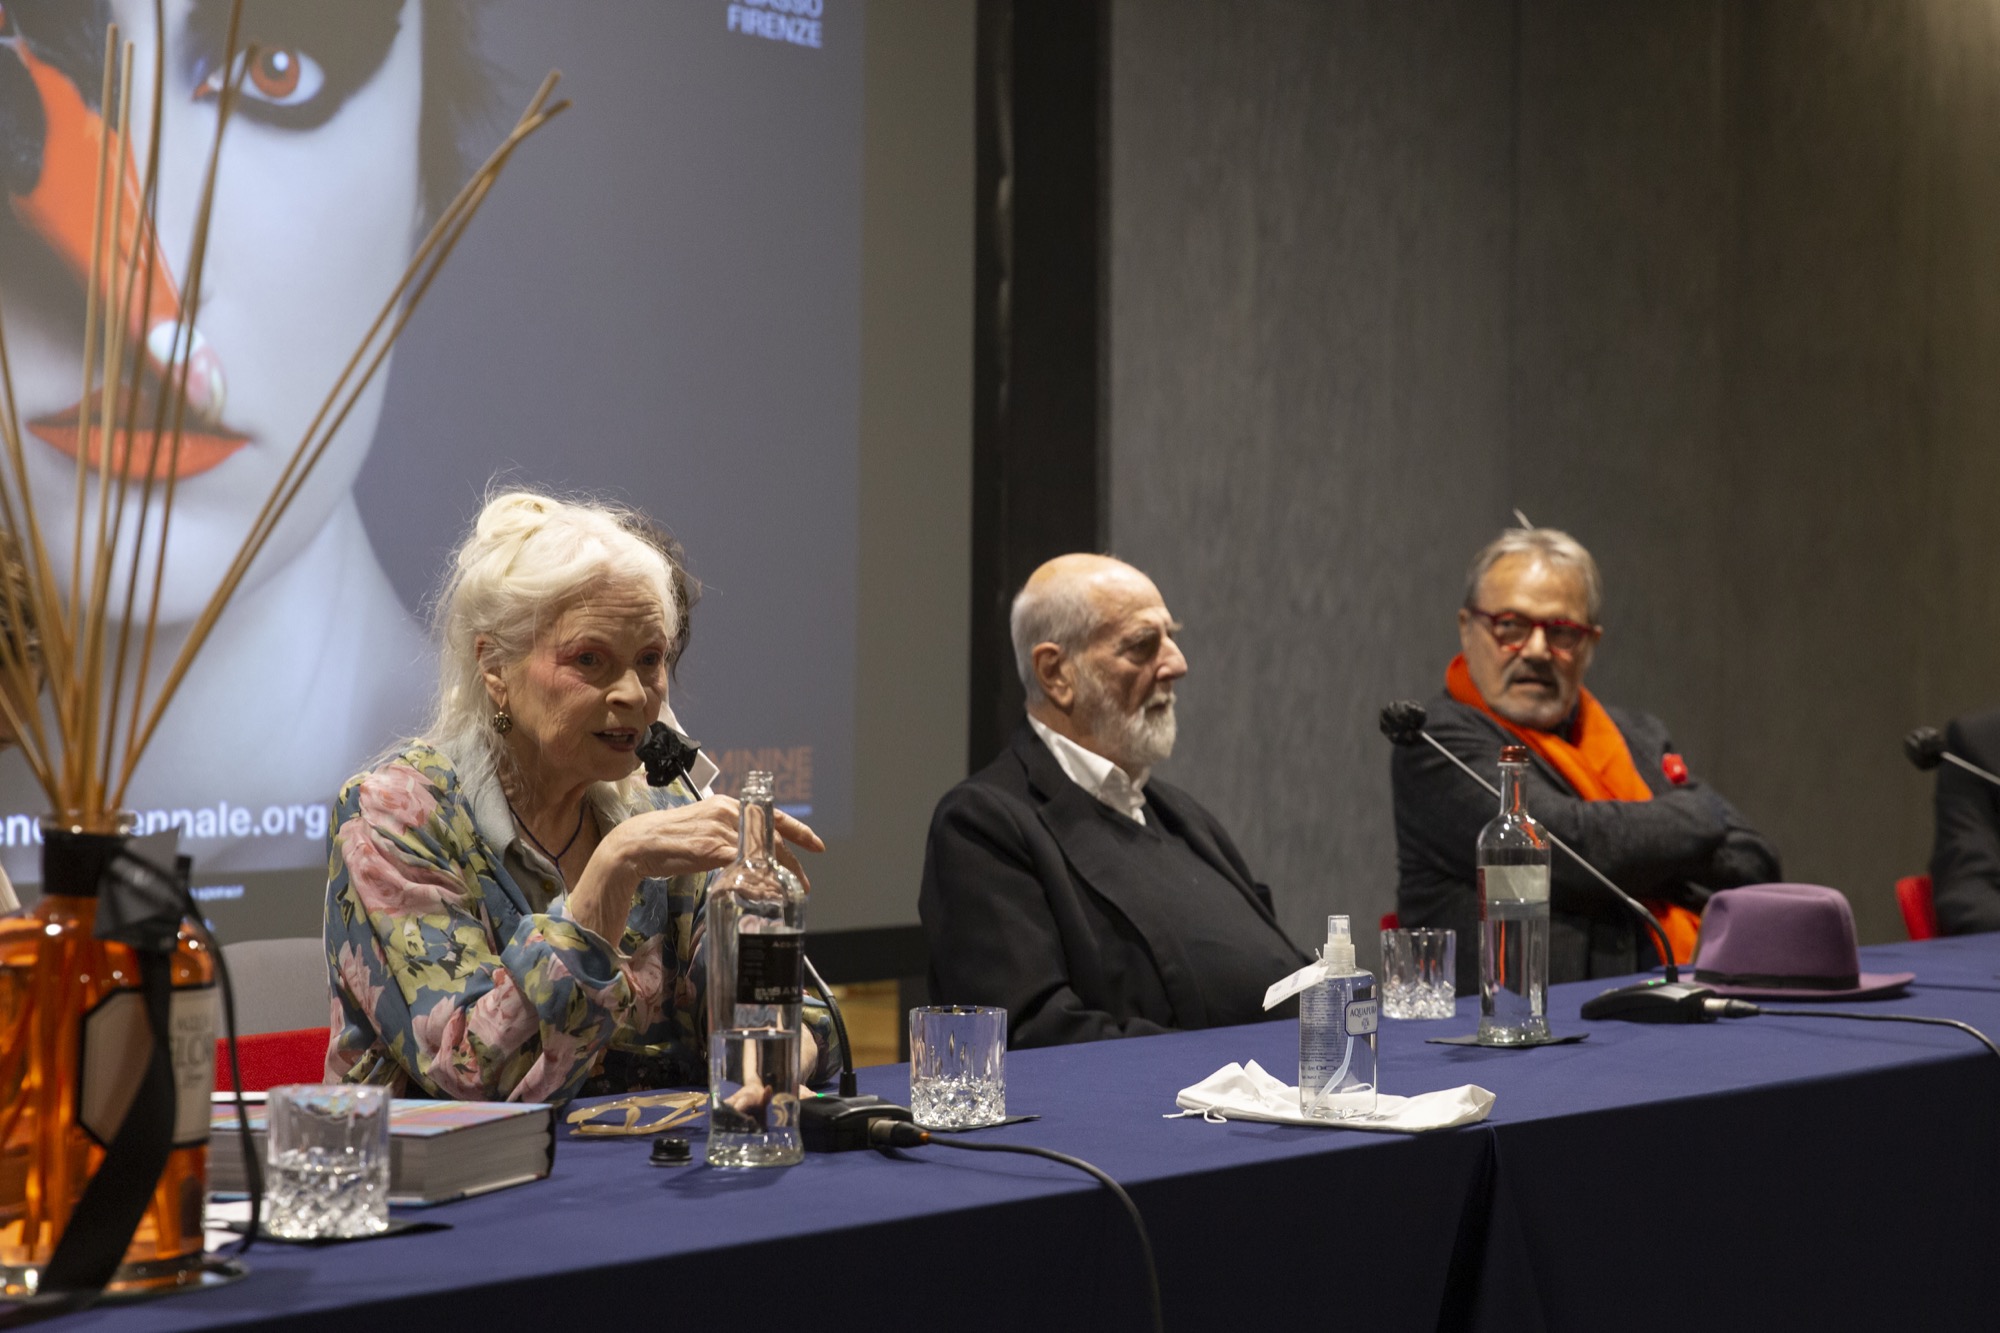 La tavola rotonda con Michelangelo Pistoletto, Oliviero Toscani e Vivienne Westwood